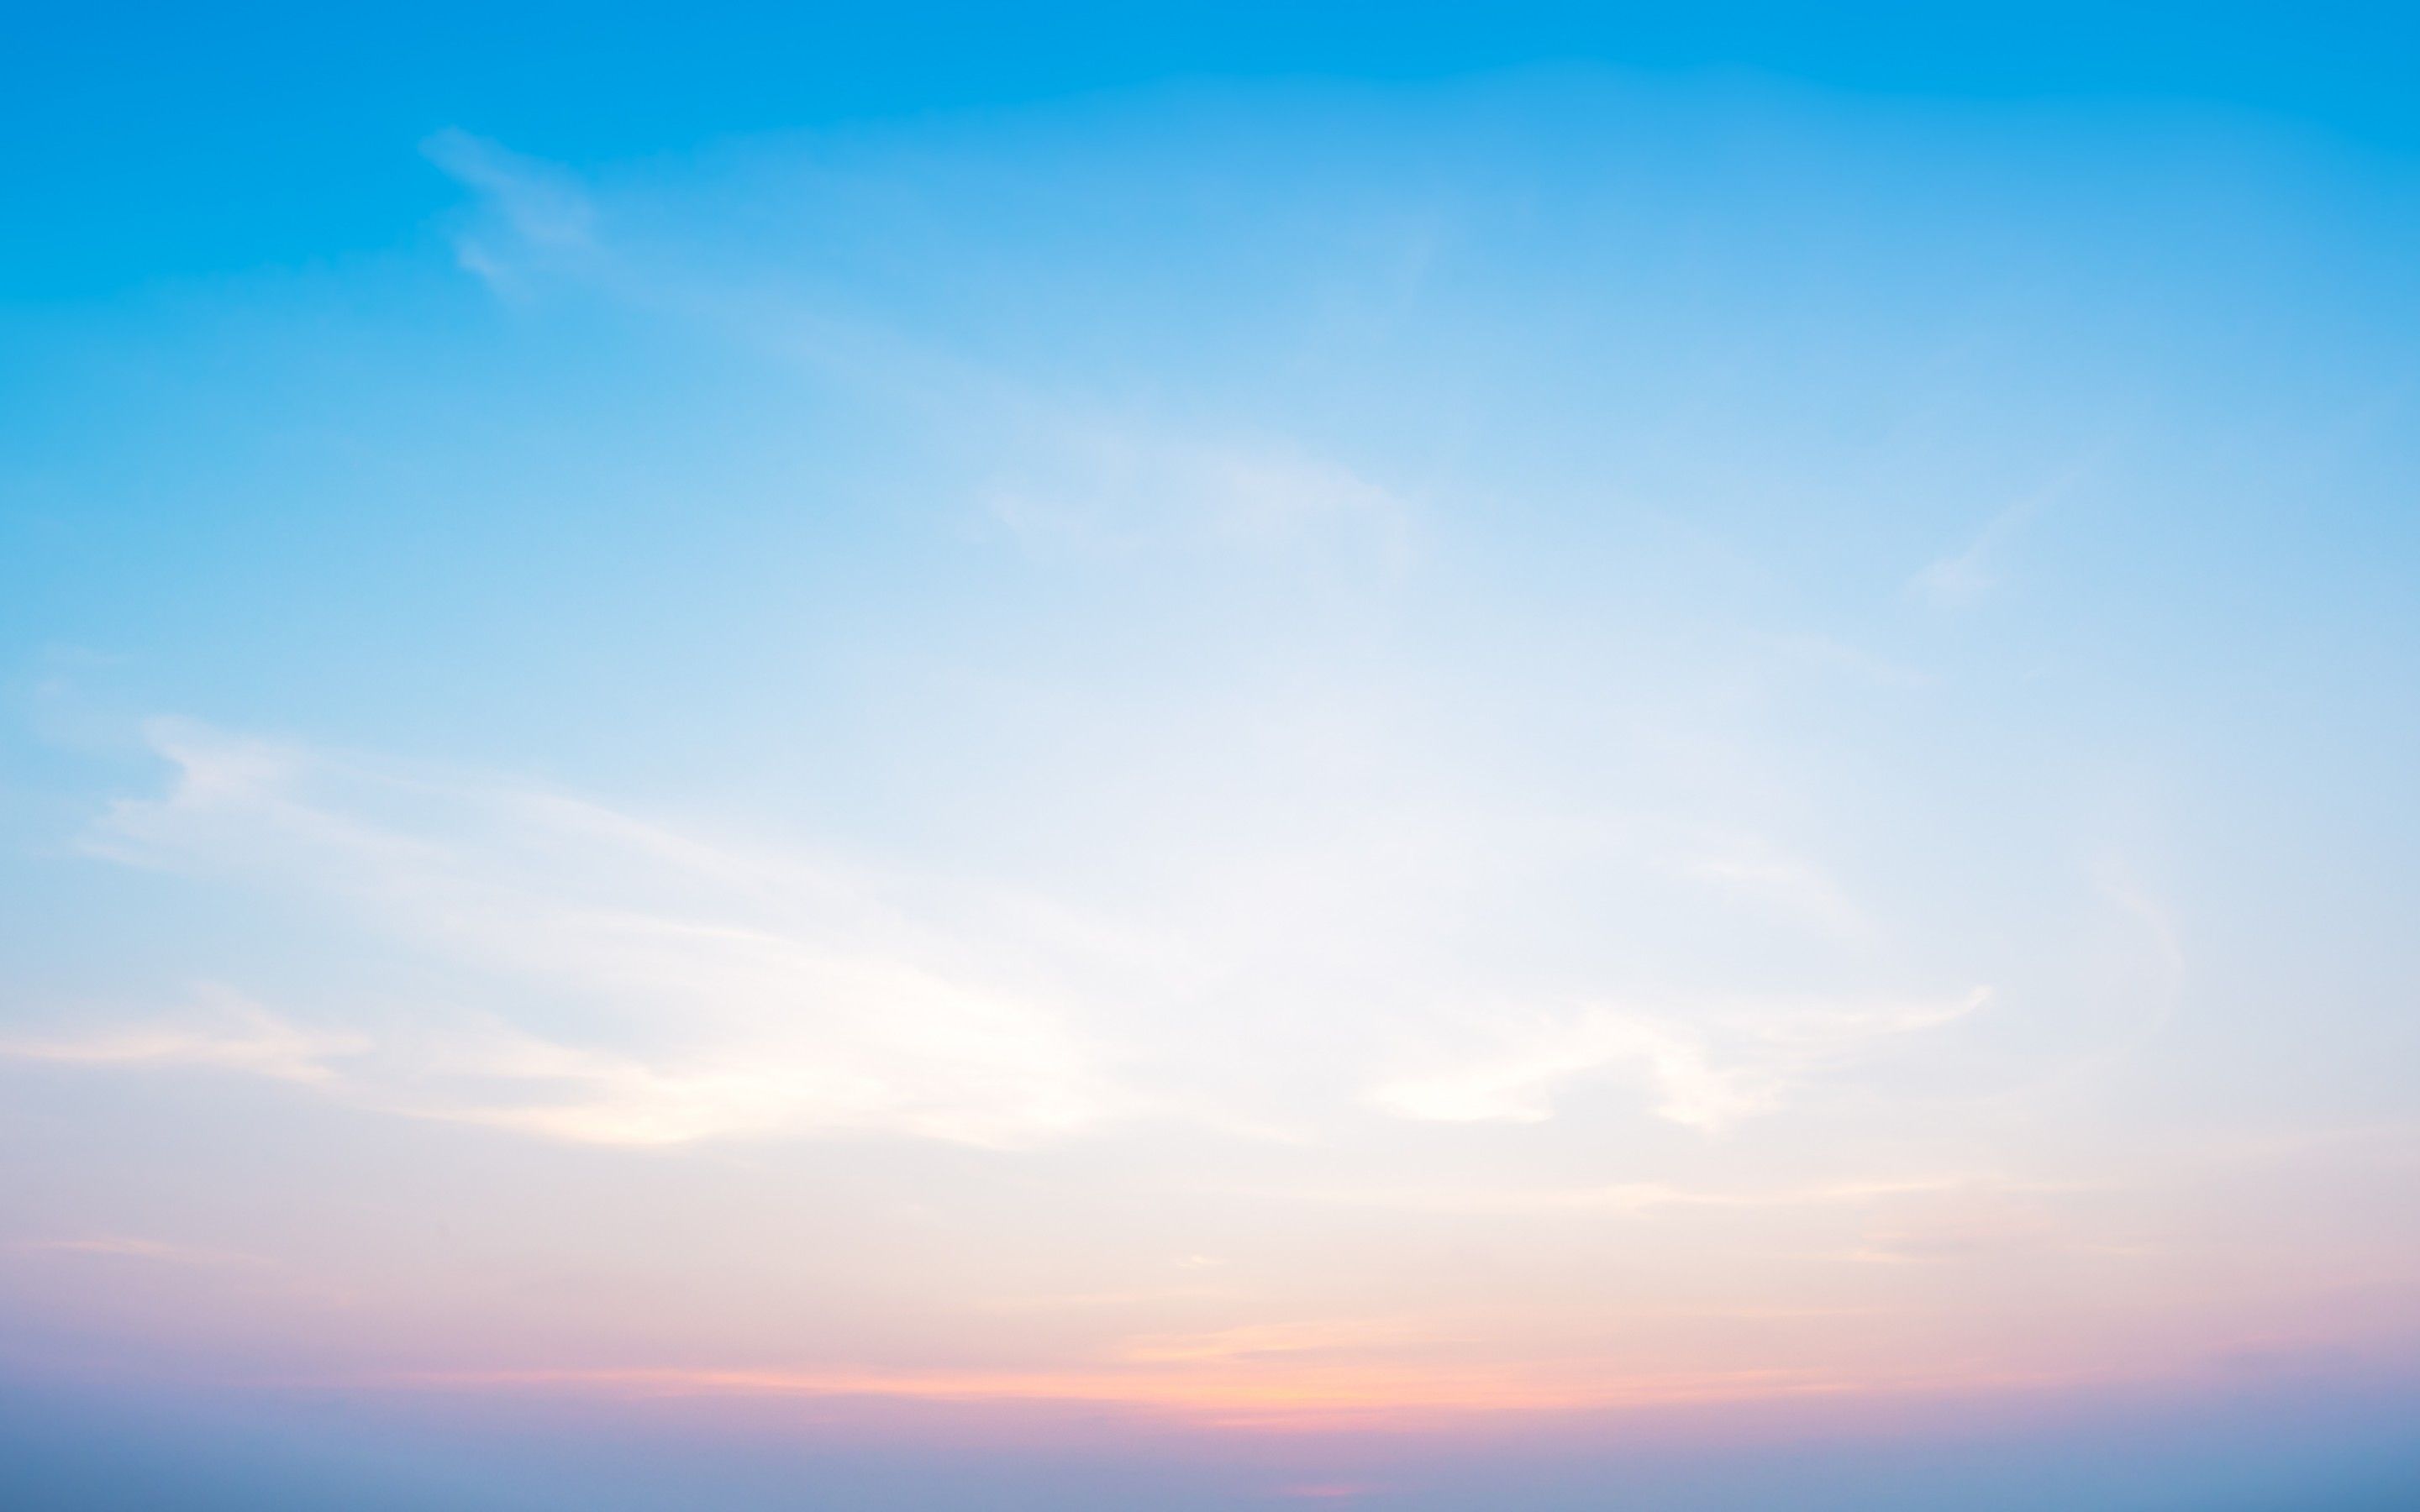 Sunrise 4K Wallpaper, Blue sky, Panorama, Early Morning, Dawn, 5K, Nature